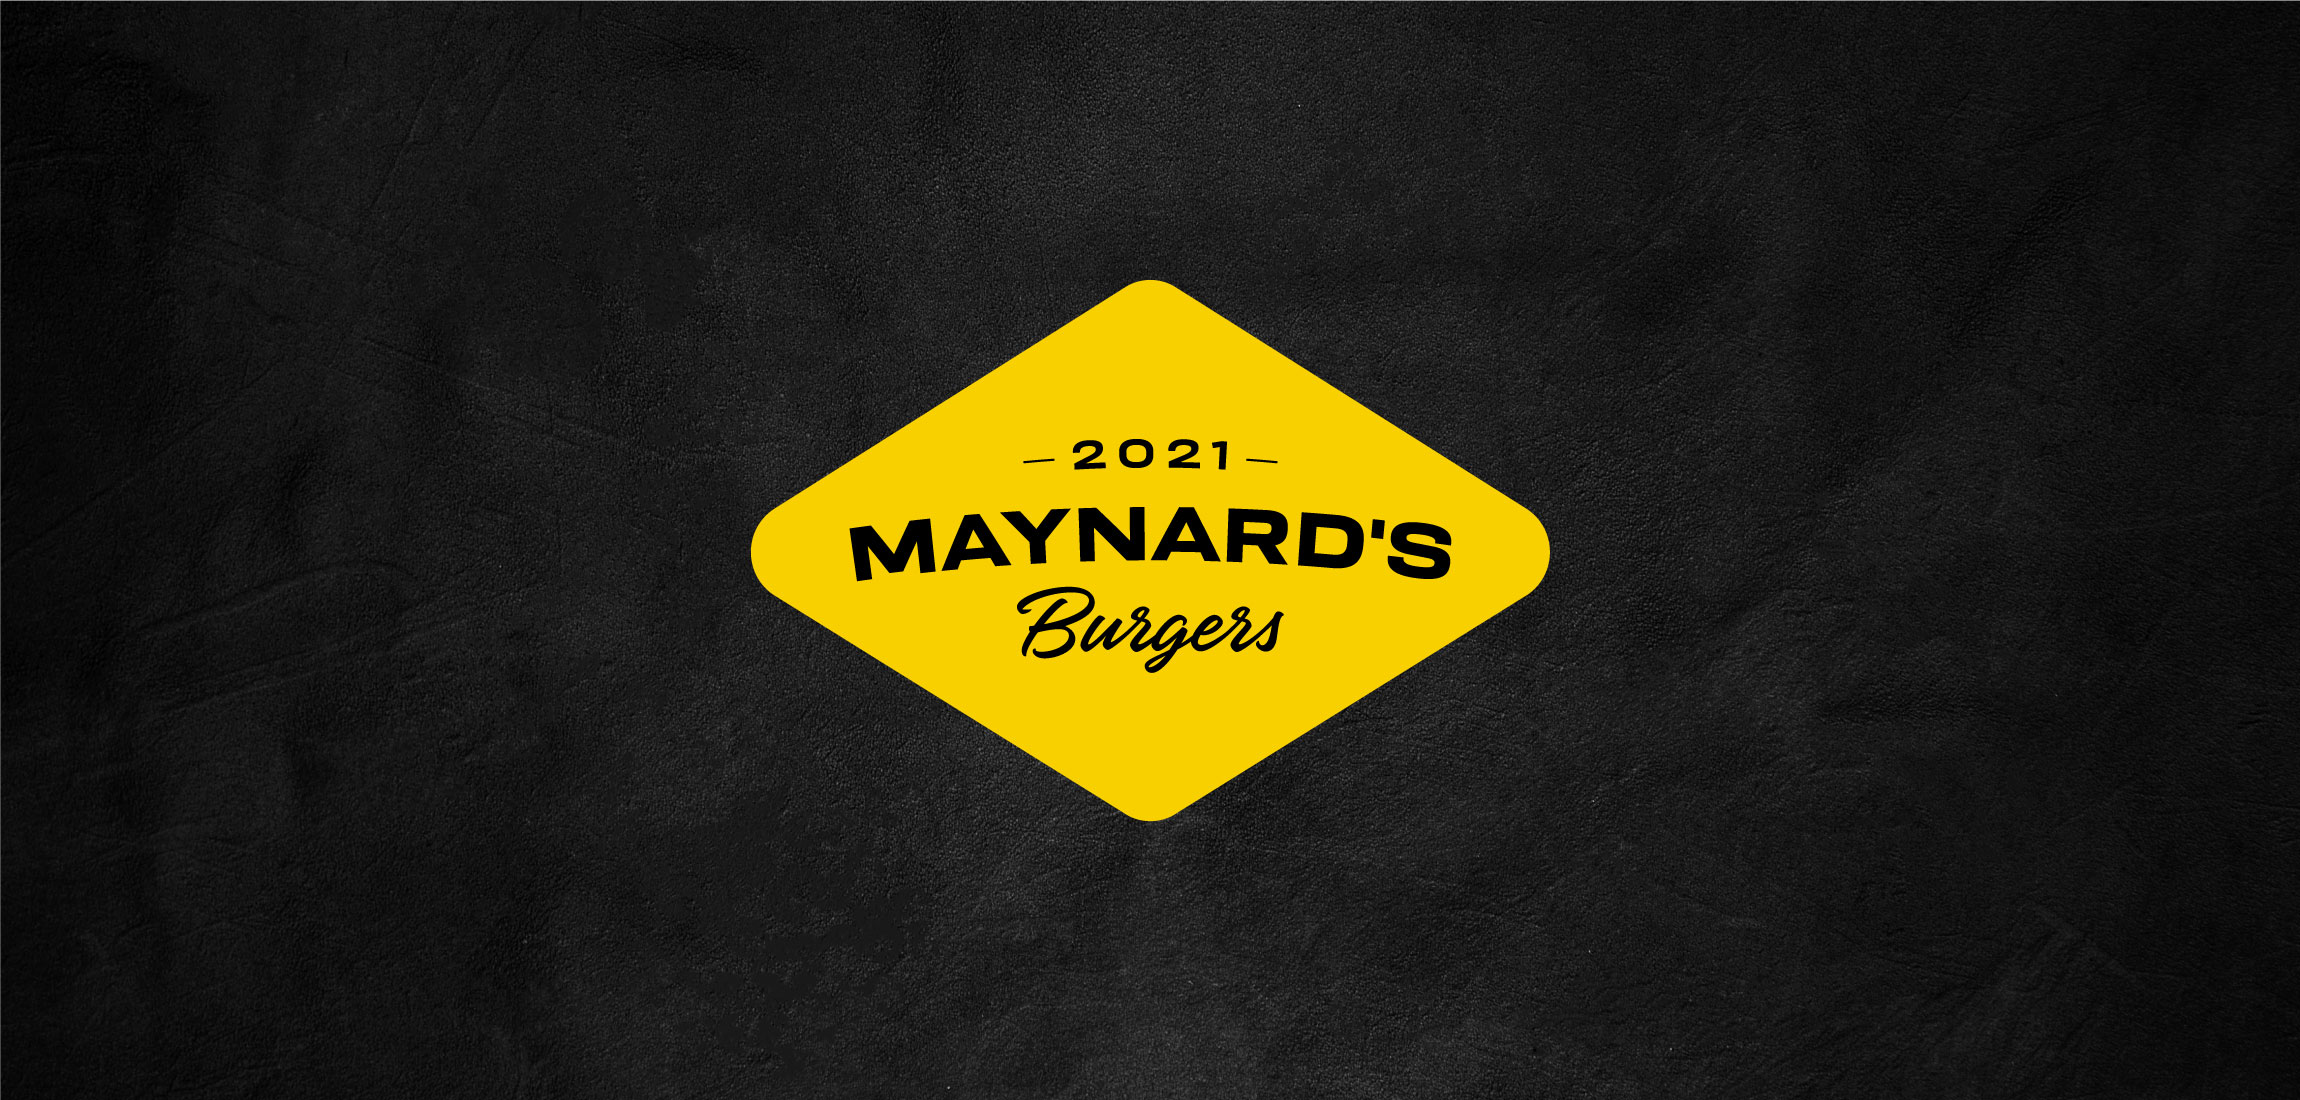 Maynard's Burgers